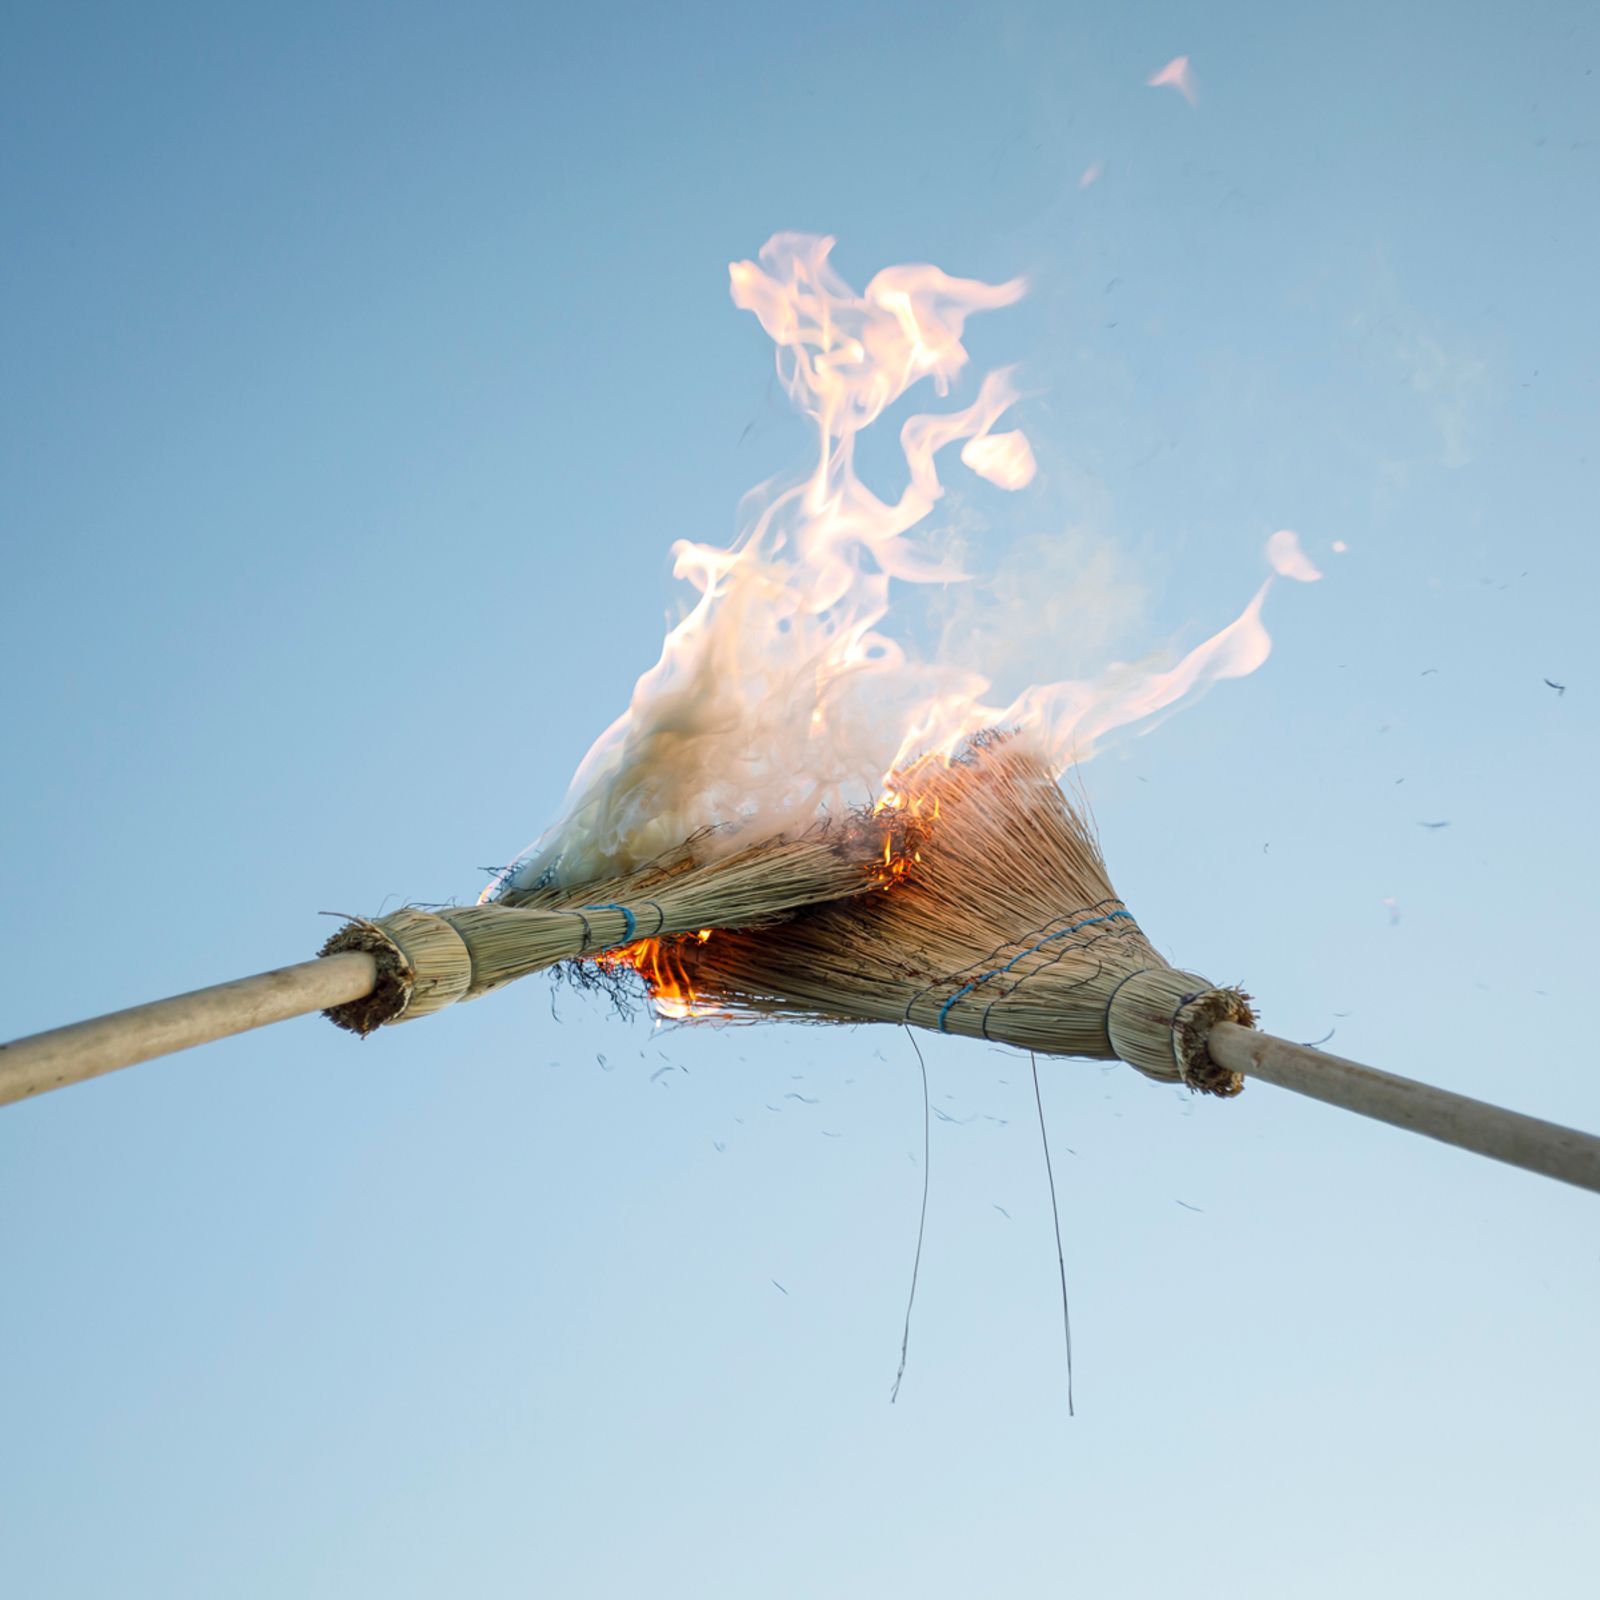 © Johanna Maria Fritz - The burning of brooms is a staple part of many rituals. Mogoșoaia, Romania, 2019.